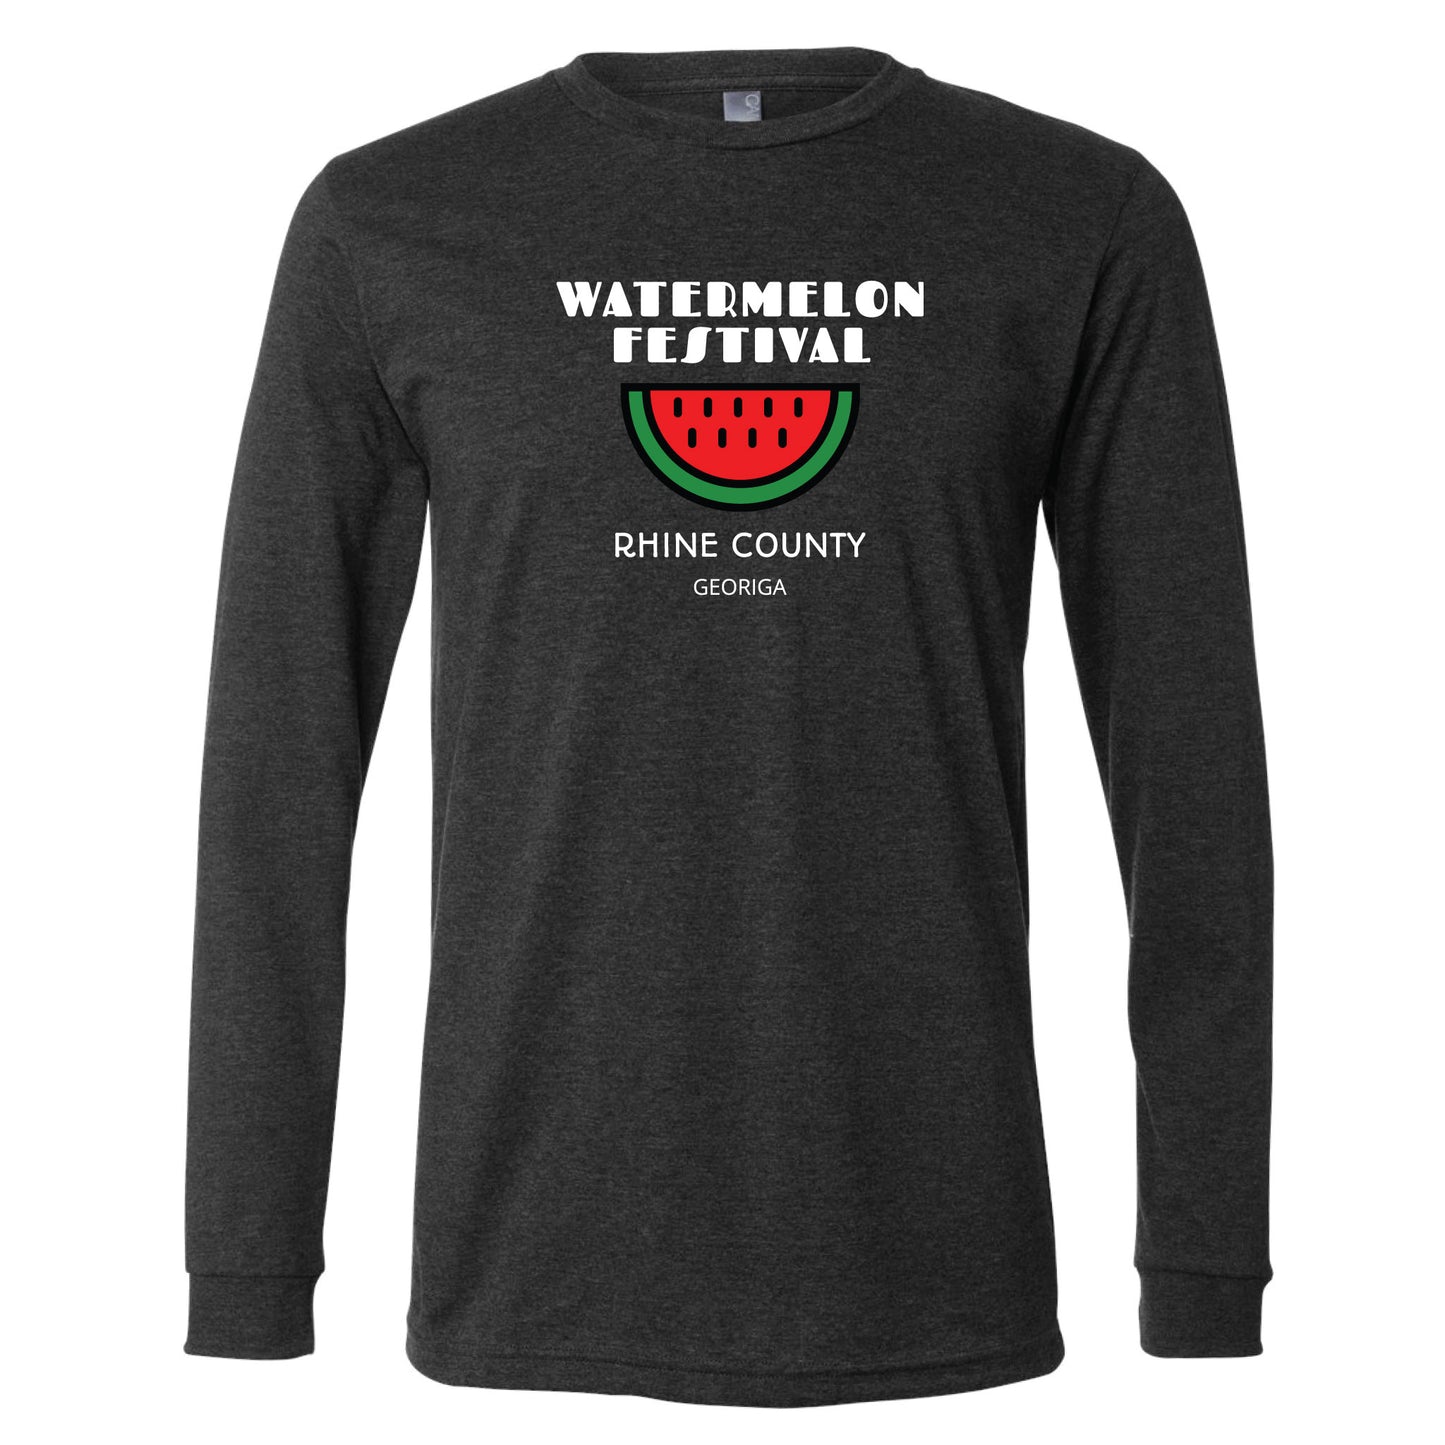 Watermelon Festival Long Sleeve T-Shirt